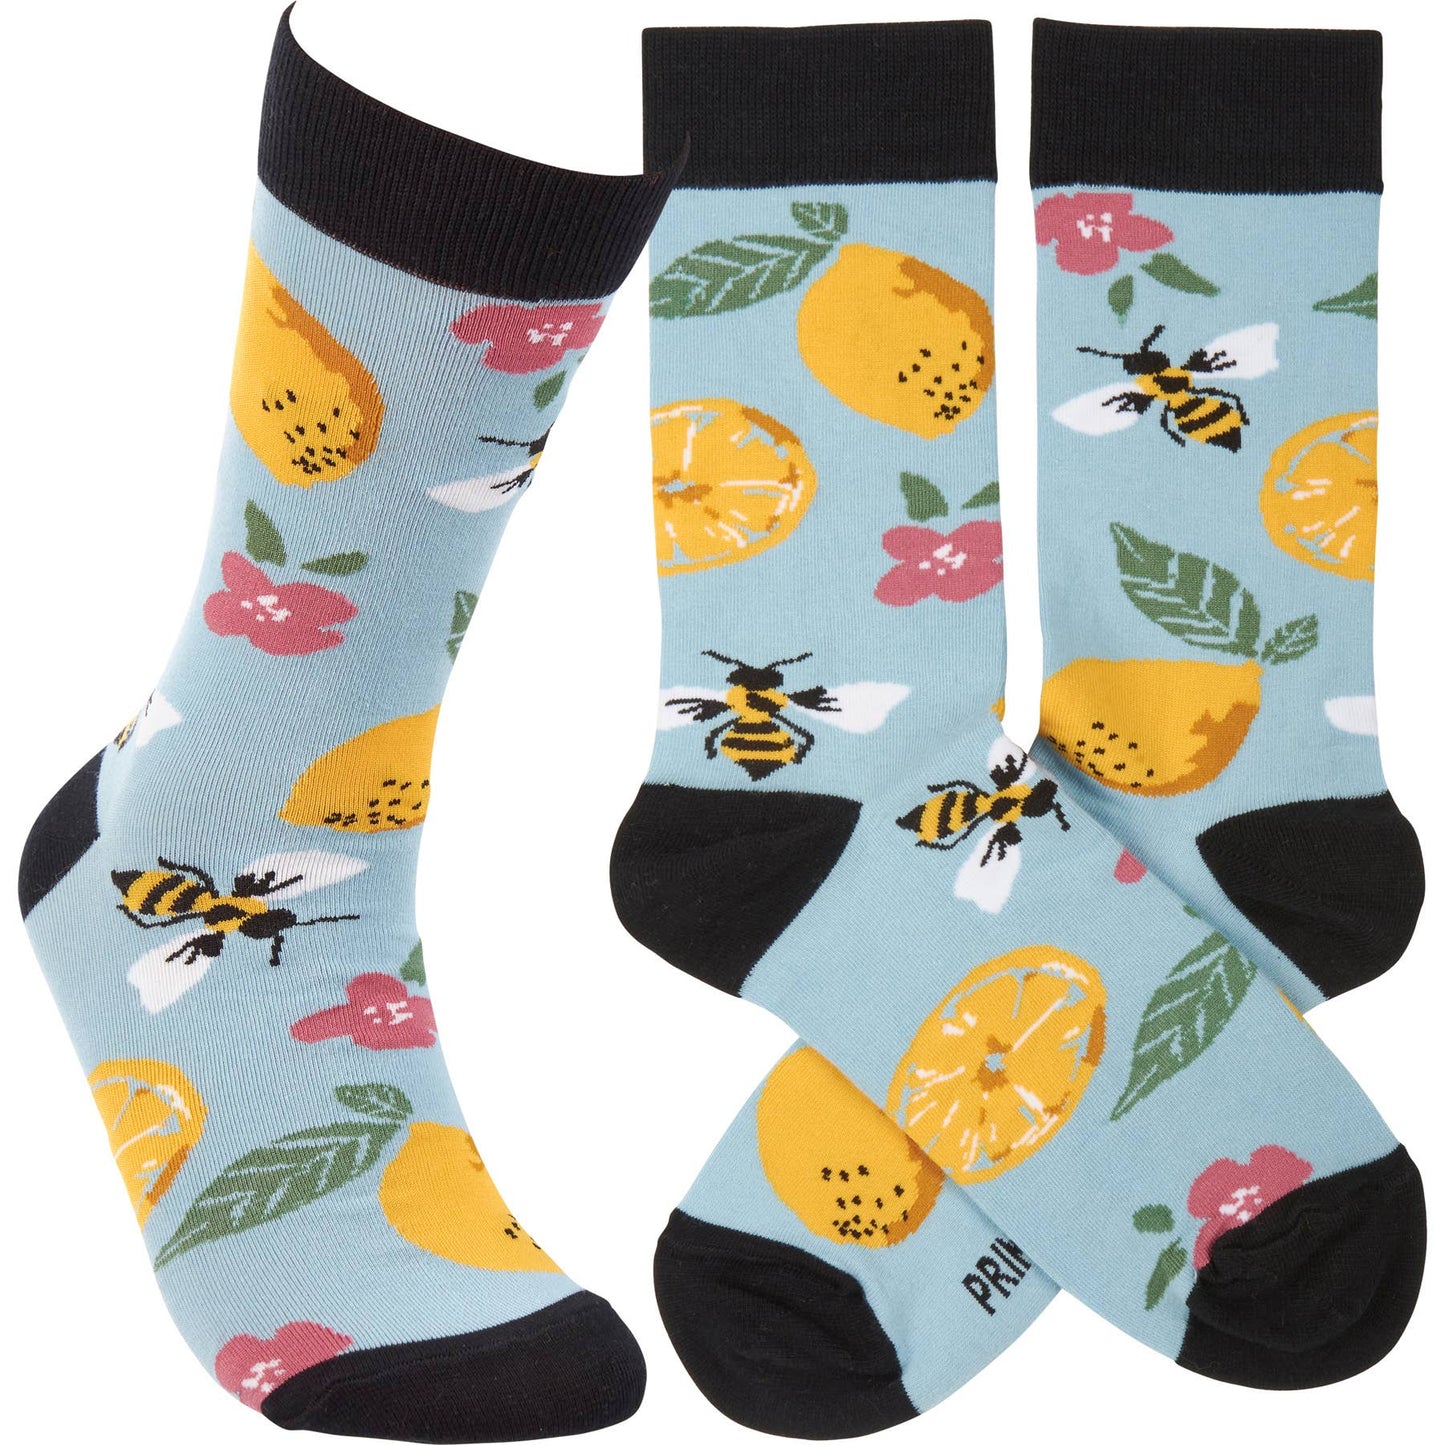 Lemons And Bees Socks